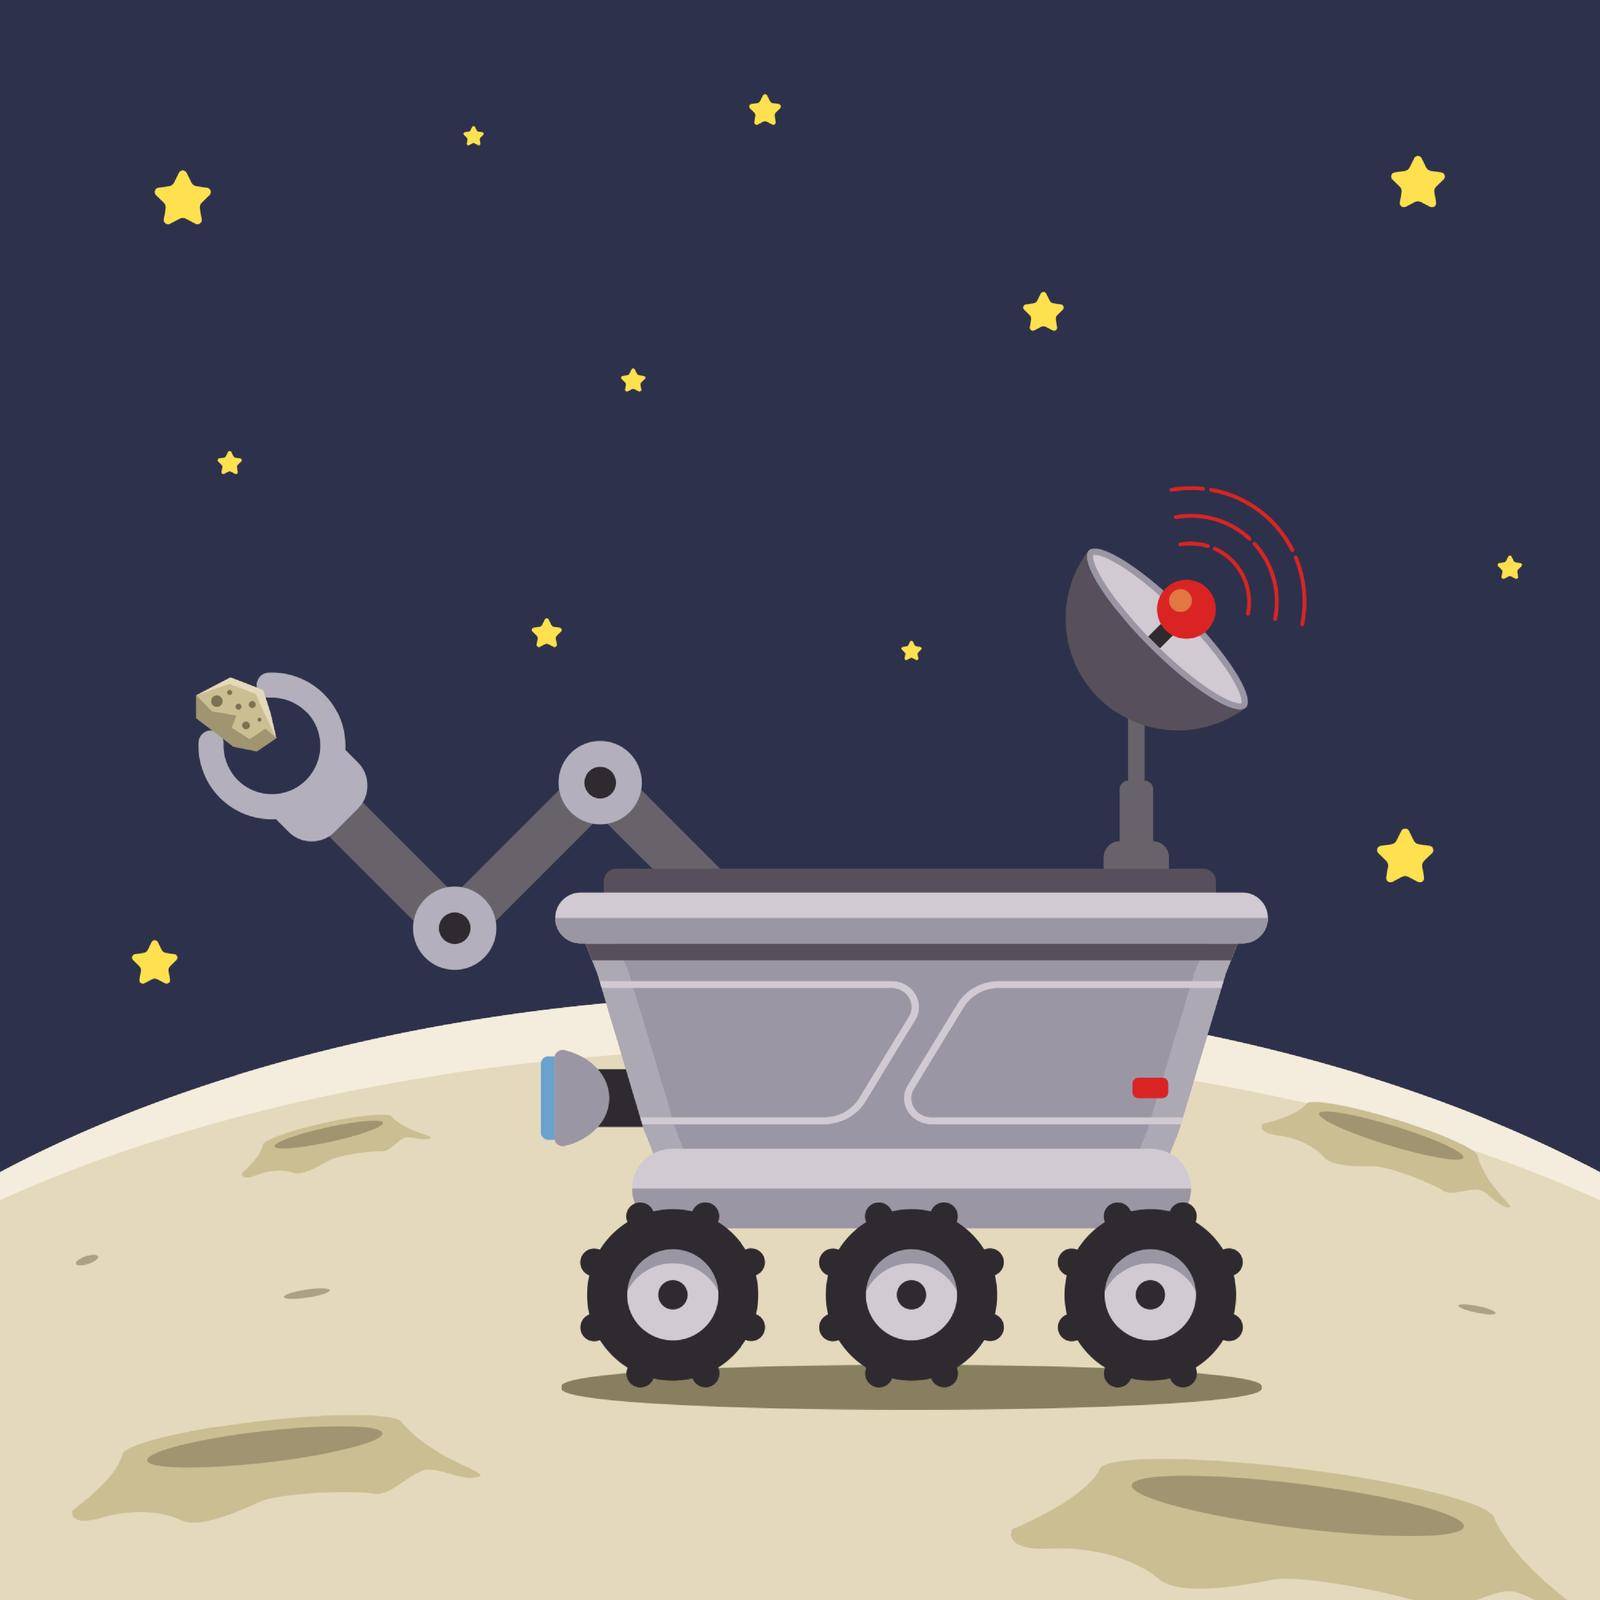 lunar rover explores the moon. flat vector illustration.